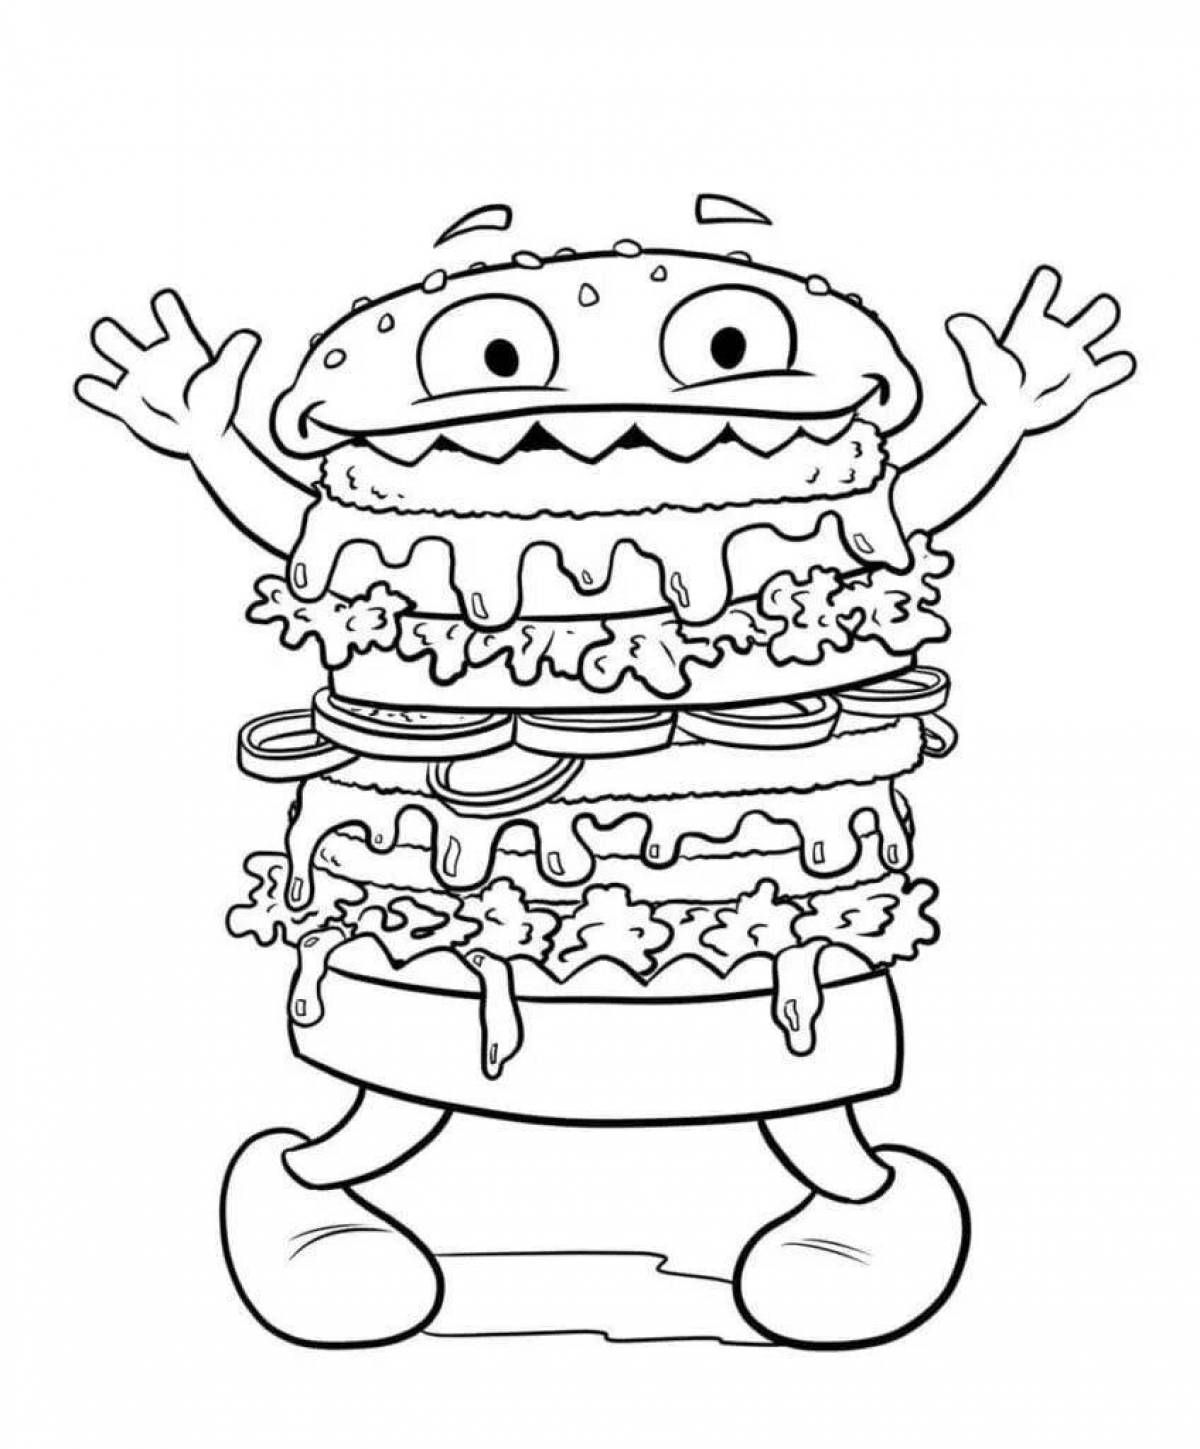 Tempting cheeseburger coloring page